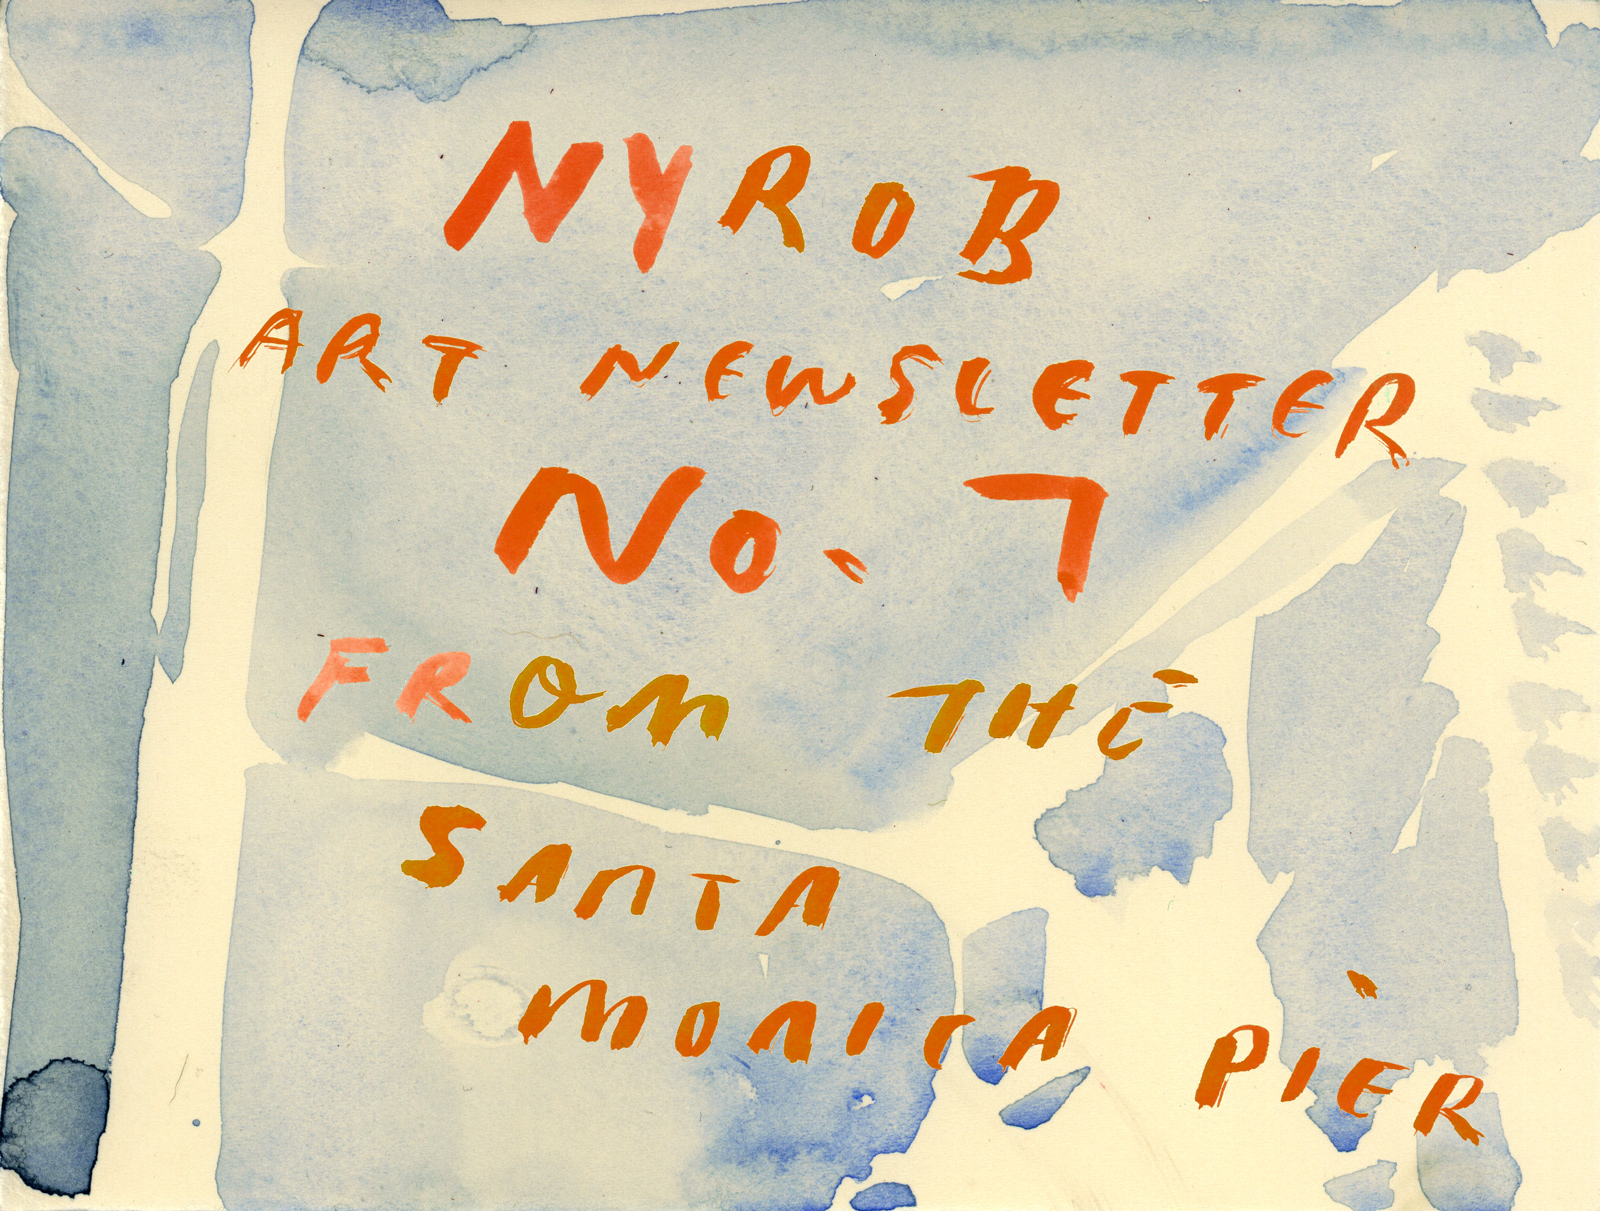 NYRB Art Newsletter No. 7 From the Santa Monica Pier